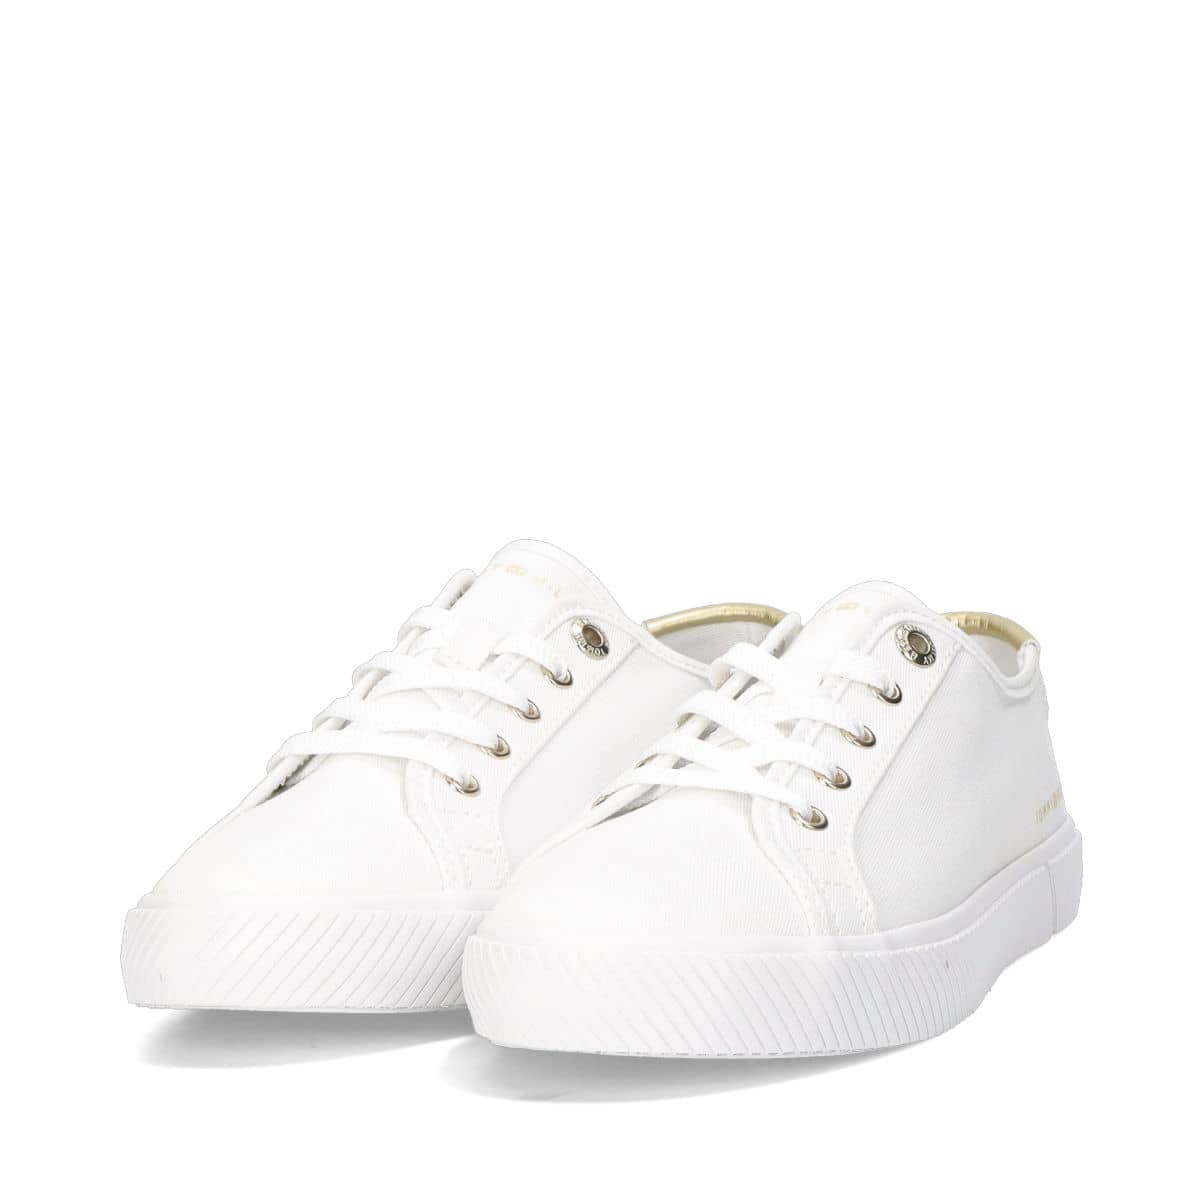 Tommy Hilfiger Women's Lawson Sneaker, White, 6